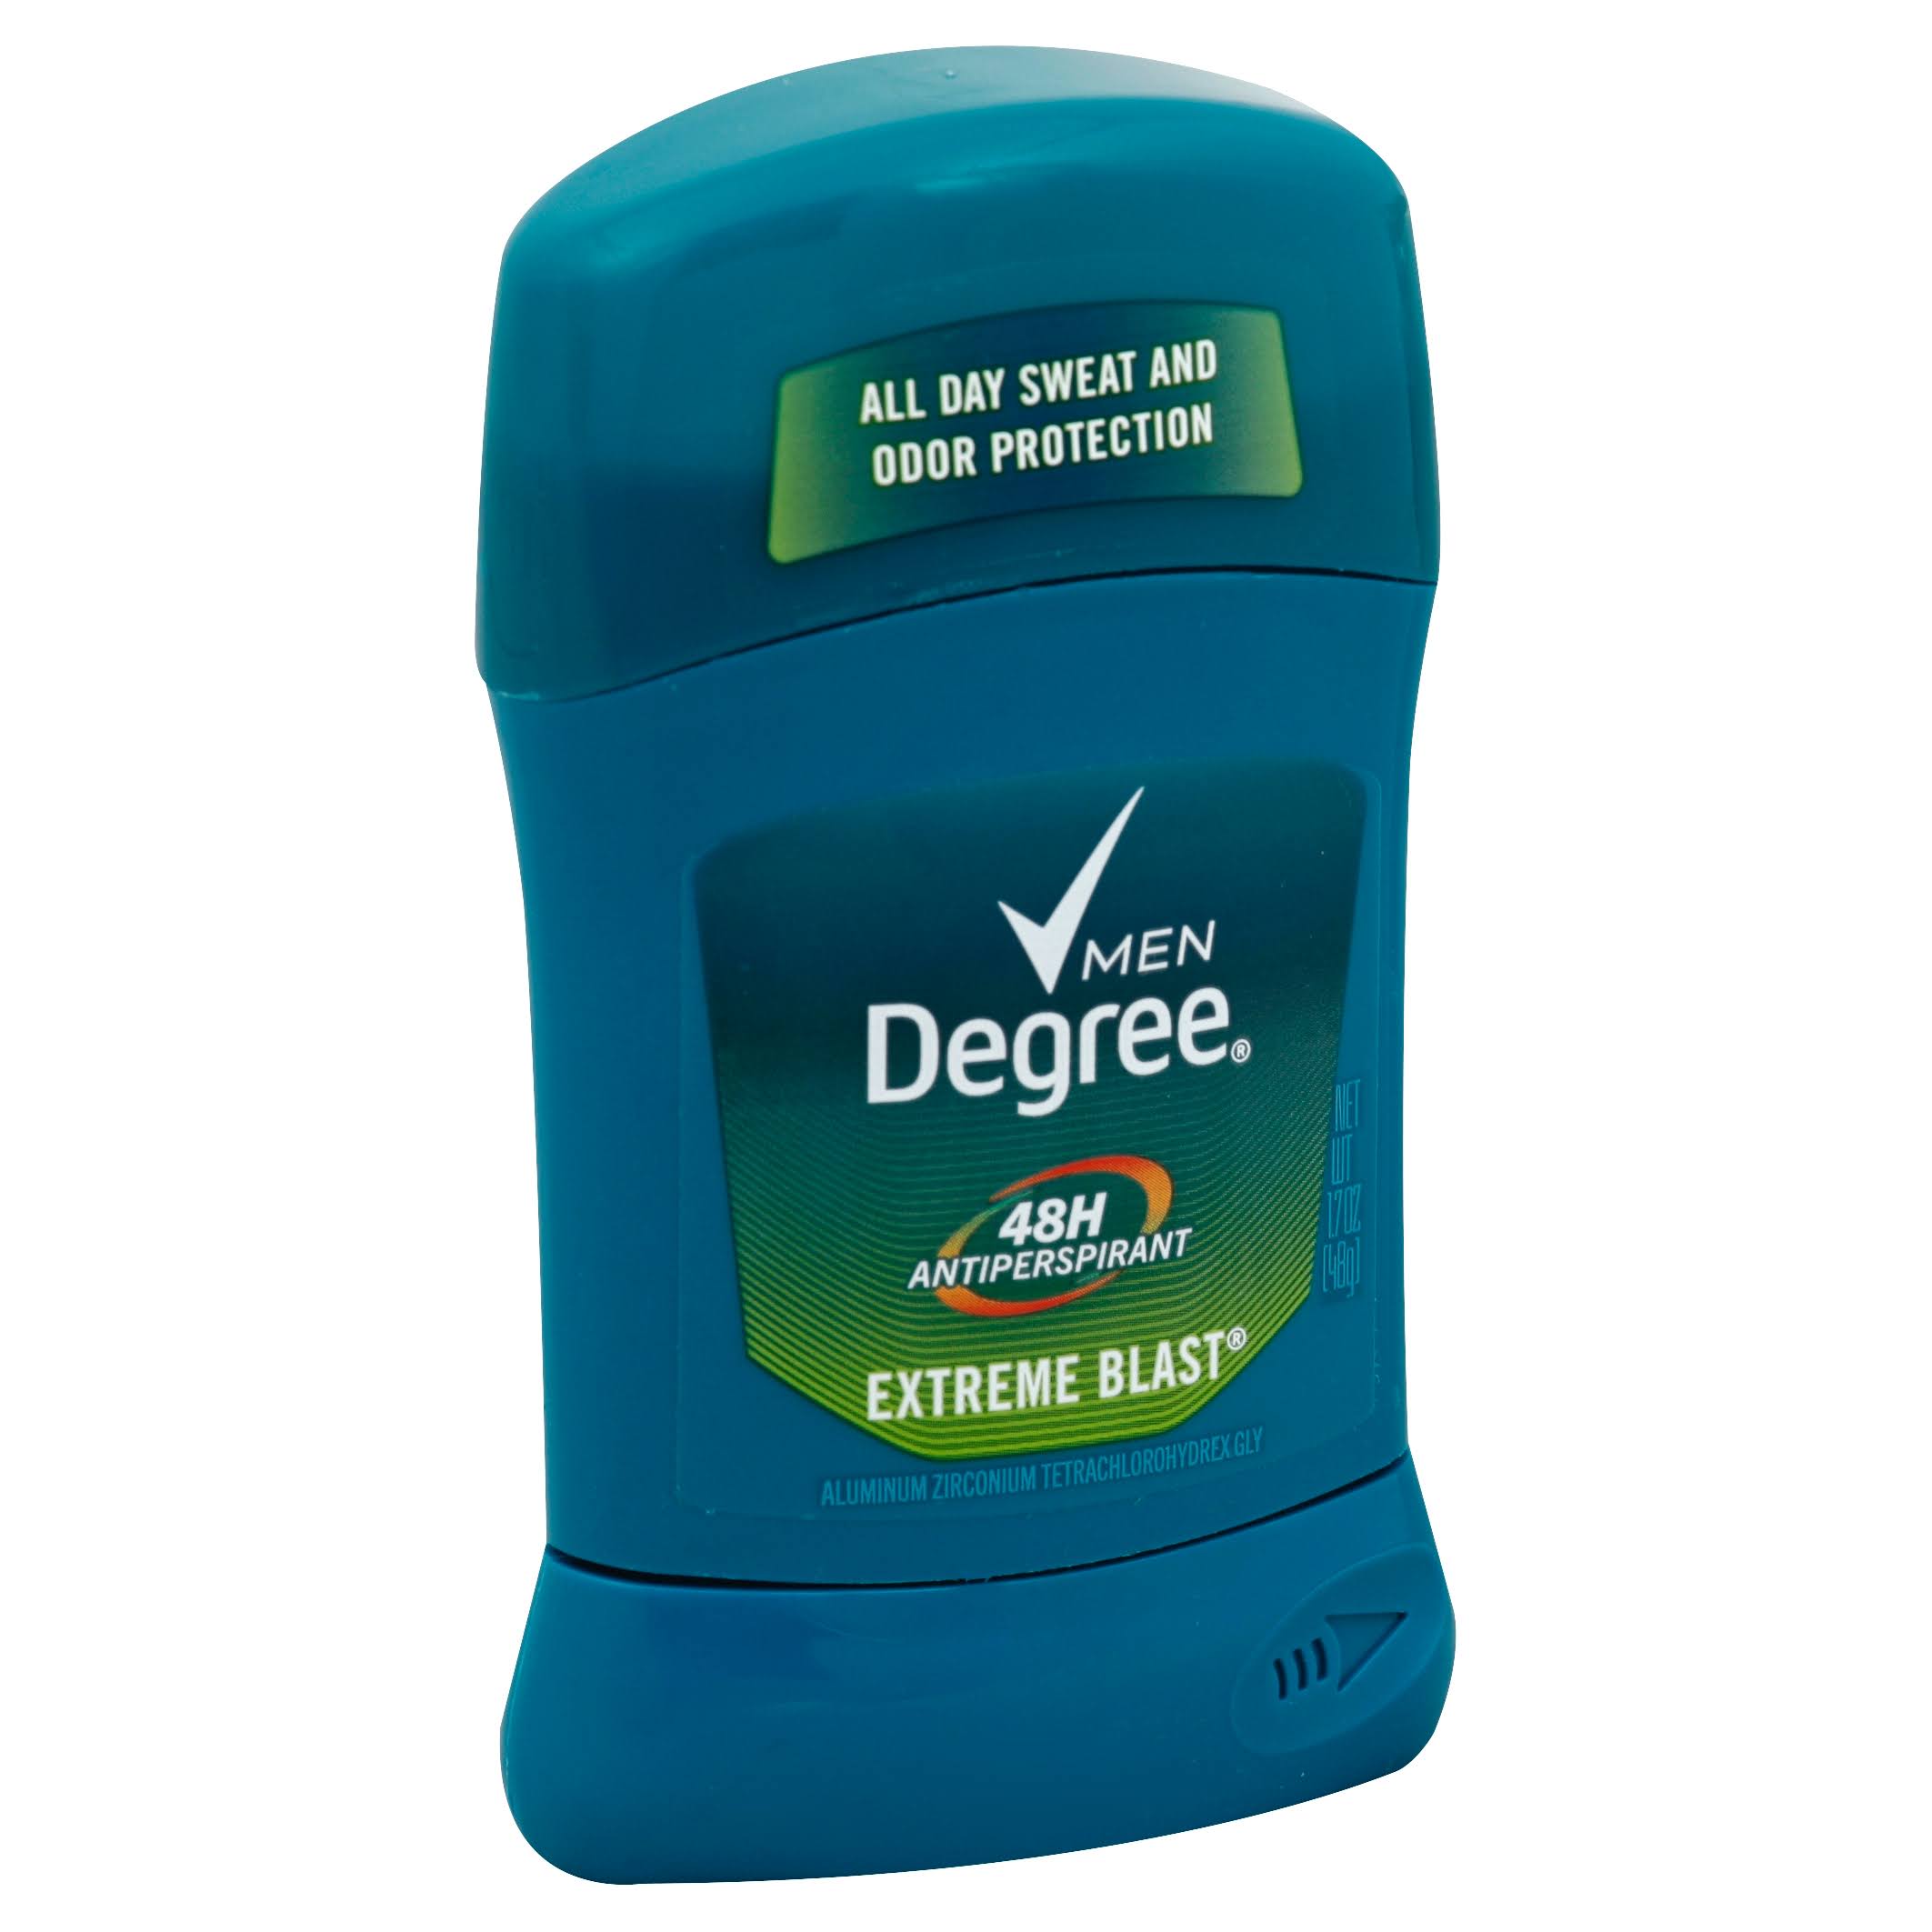 Degree Men Dry Protection Extreme Blast 48H Anti-Perspirant Deodorant - 1.7oz